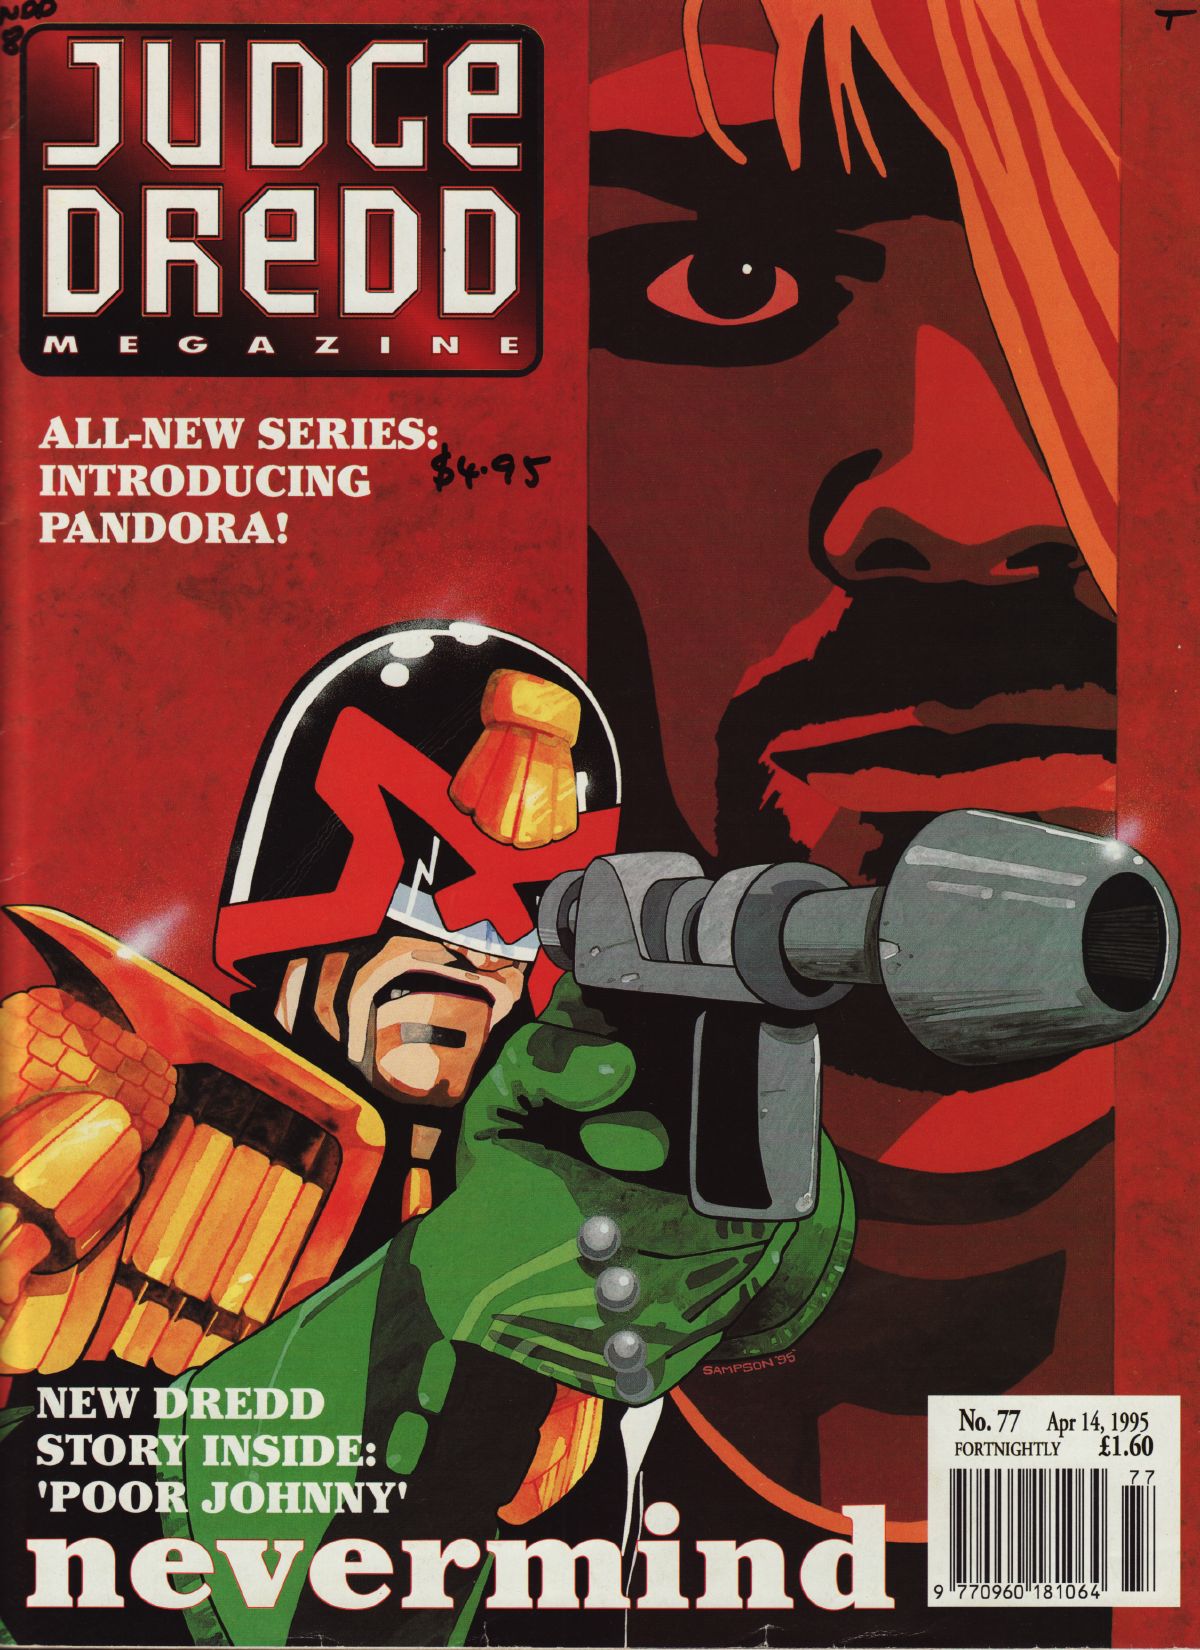 Judge Dredd: The Megazine (vol. 2) issue 77 - Page 1